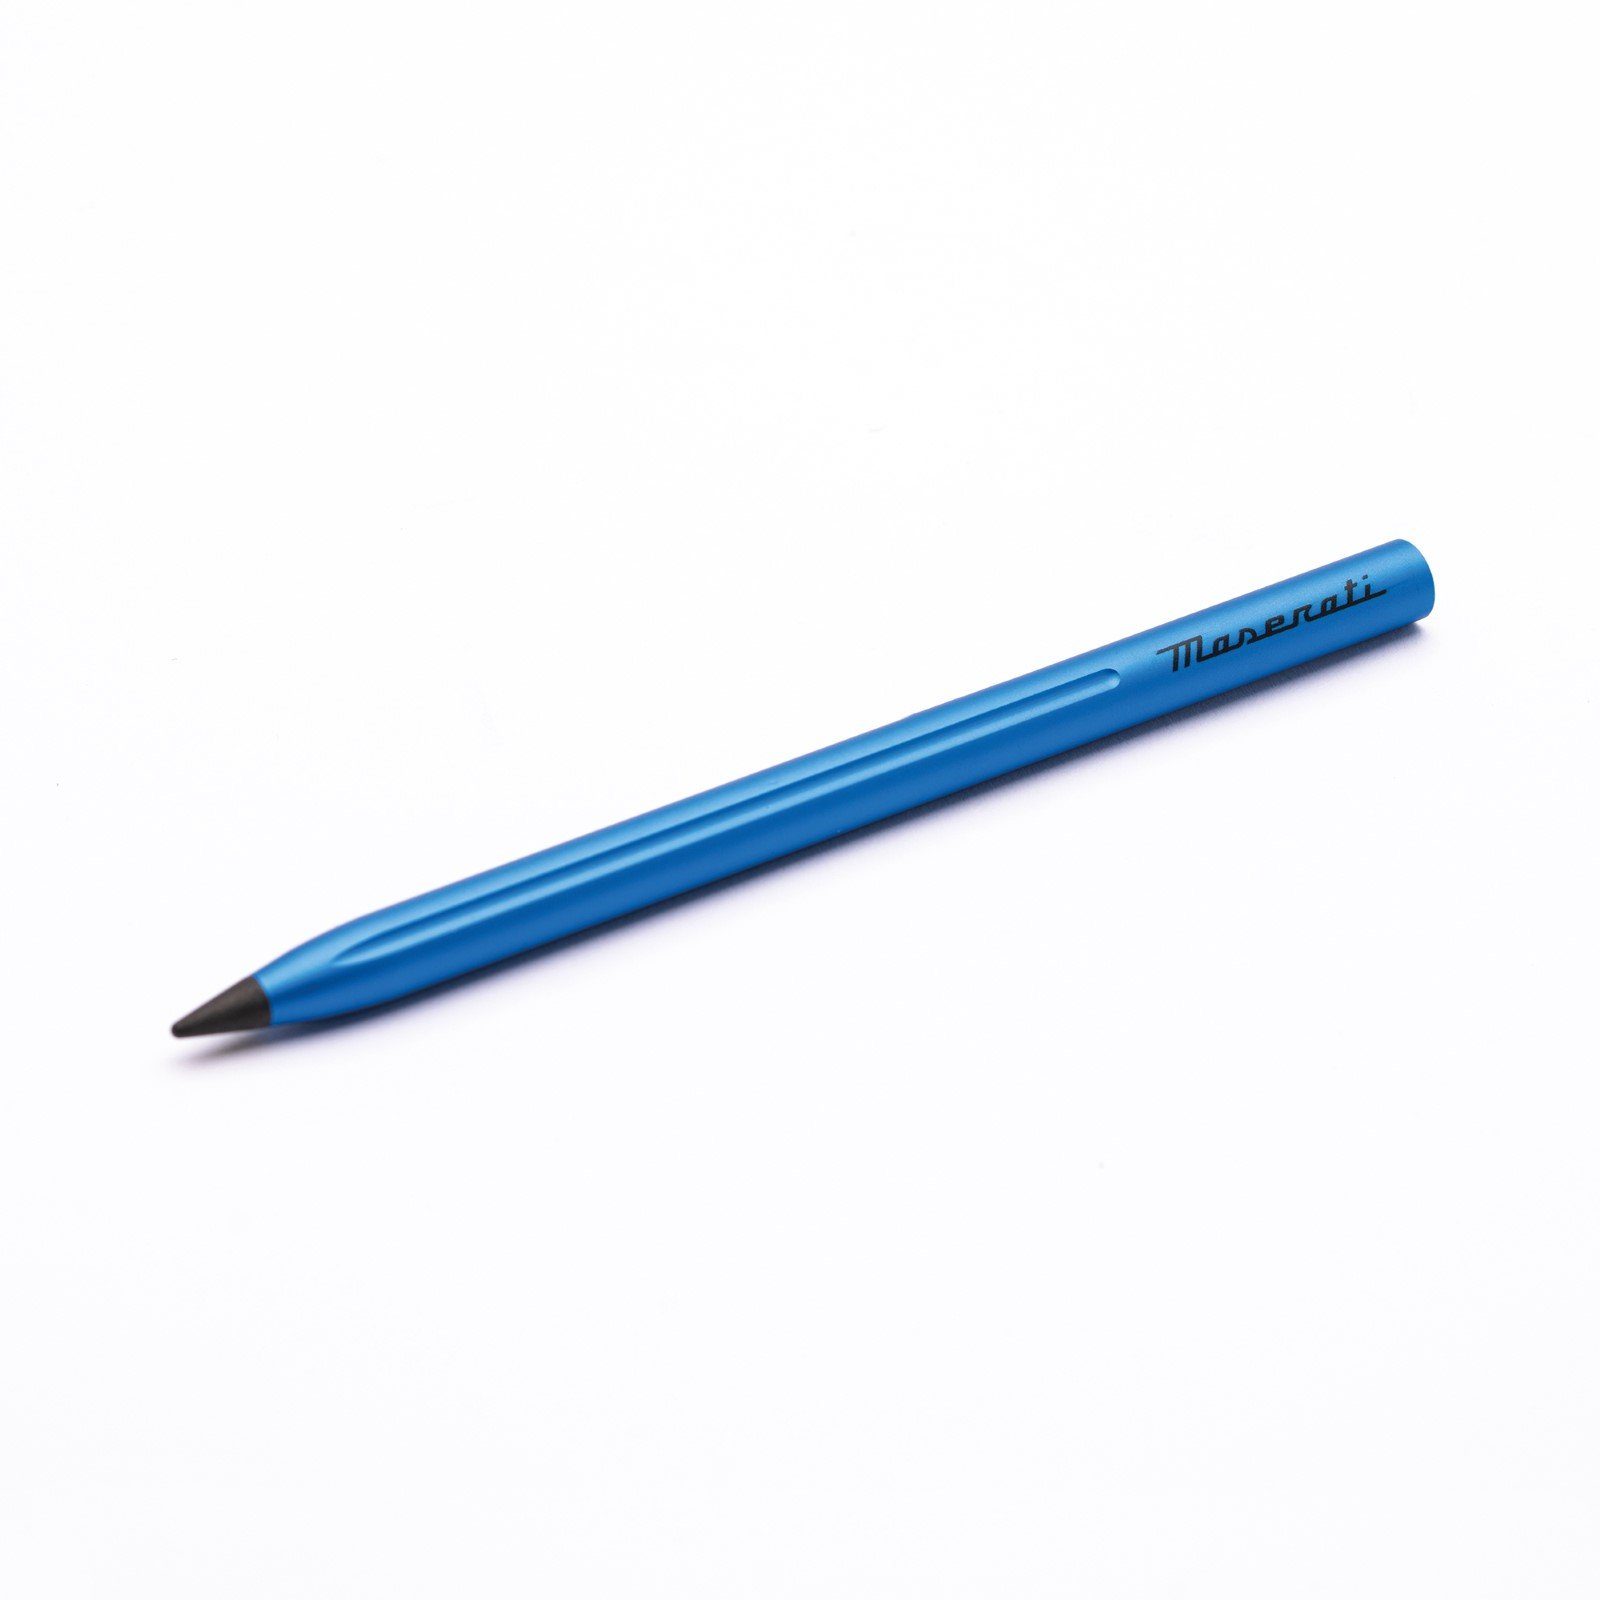 Erstes direkt geführtes Geschäft Pininfarina Bleistift Maserati Bleistift Grafeex Smart Set) Pencil (kein Schreibgerä, Bleier Pininfarina Blau